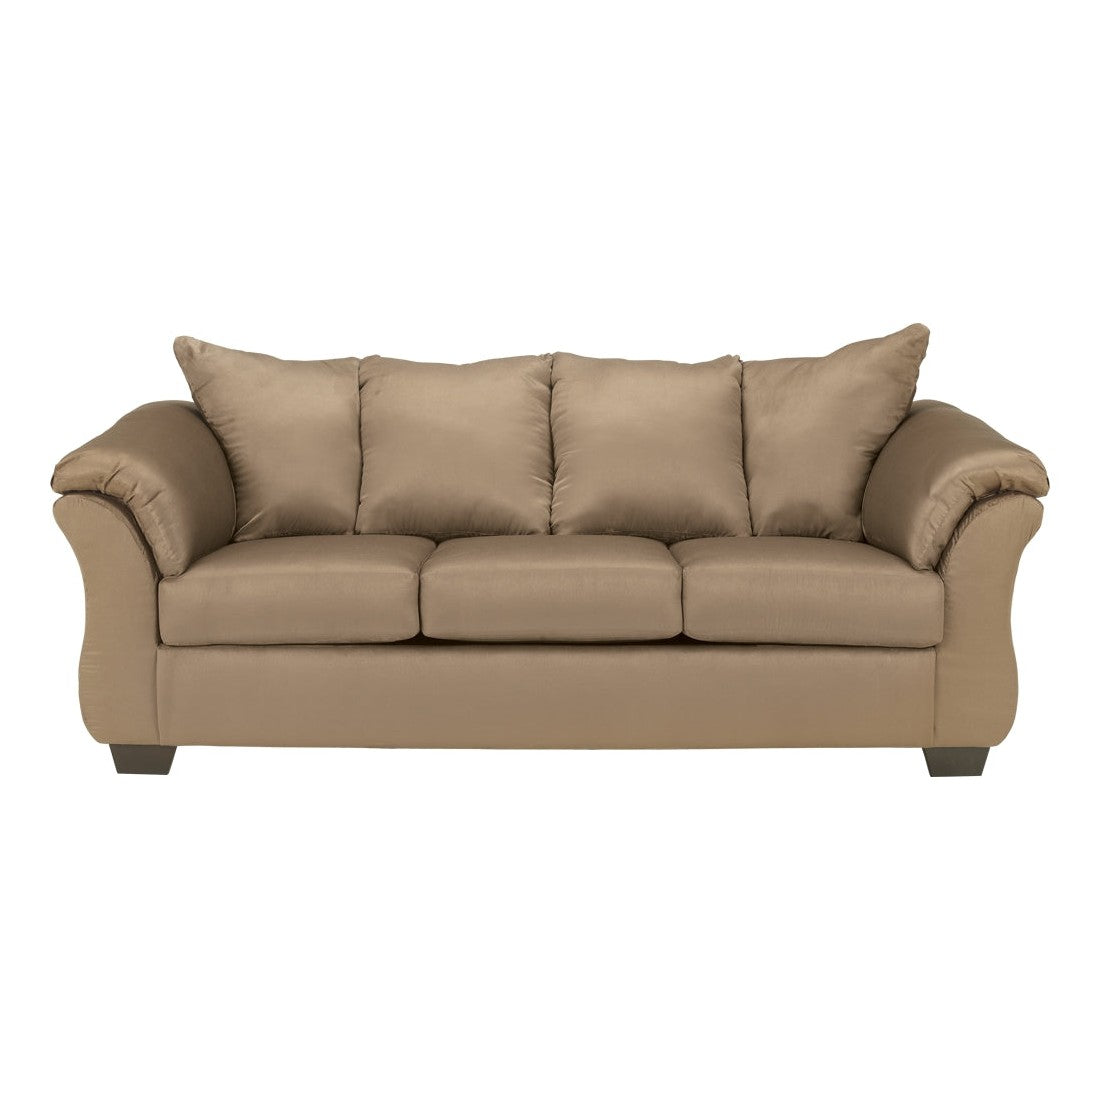 Darcy Full Sofa Sleeper Ash-7500236